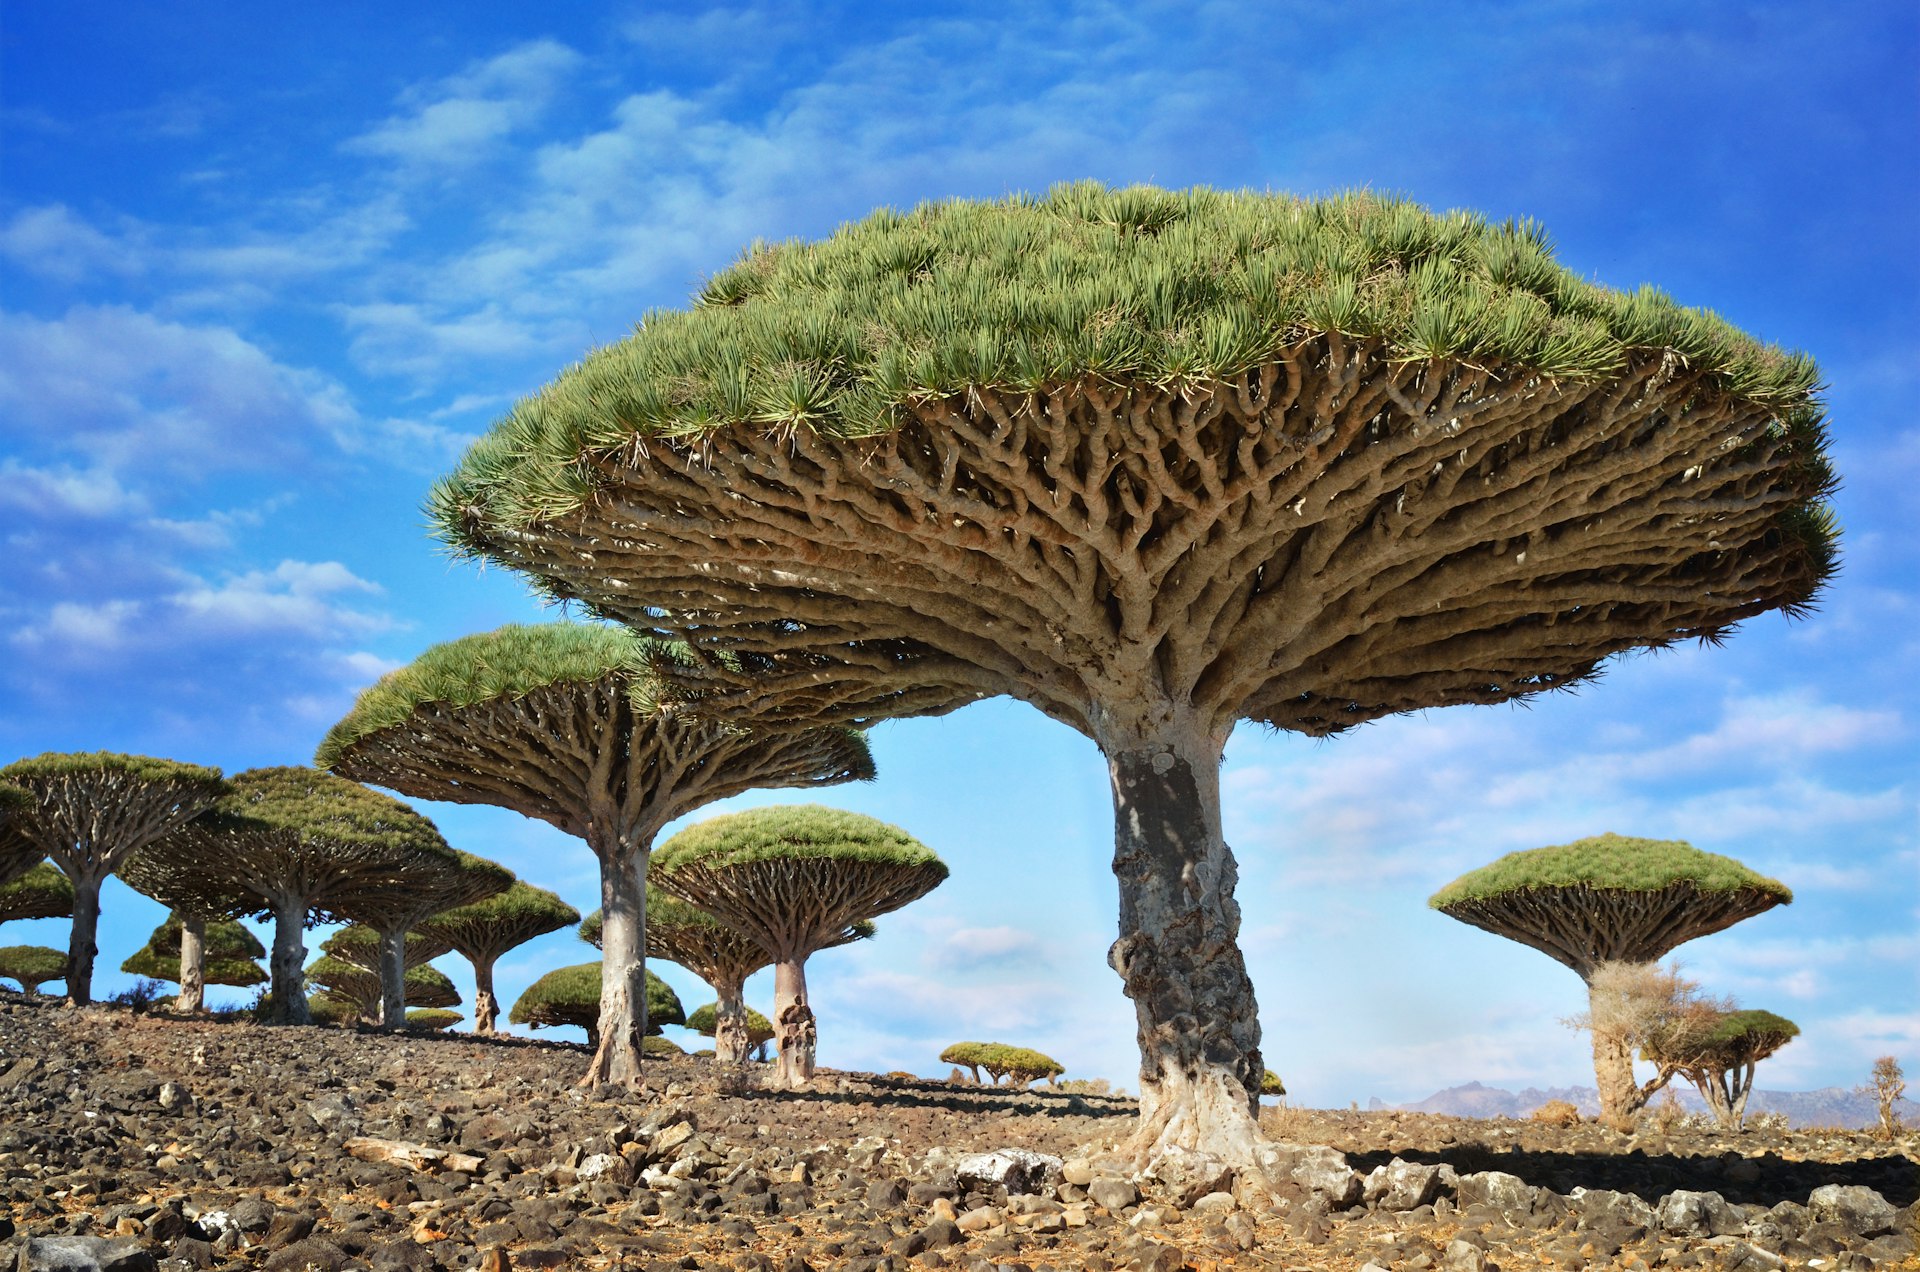 Dragonblood trees on Socotra Island, Yemen